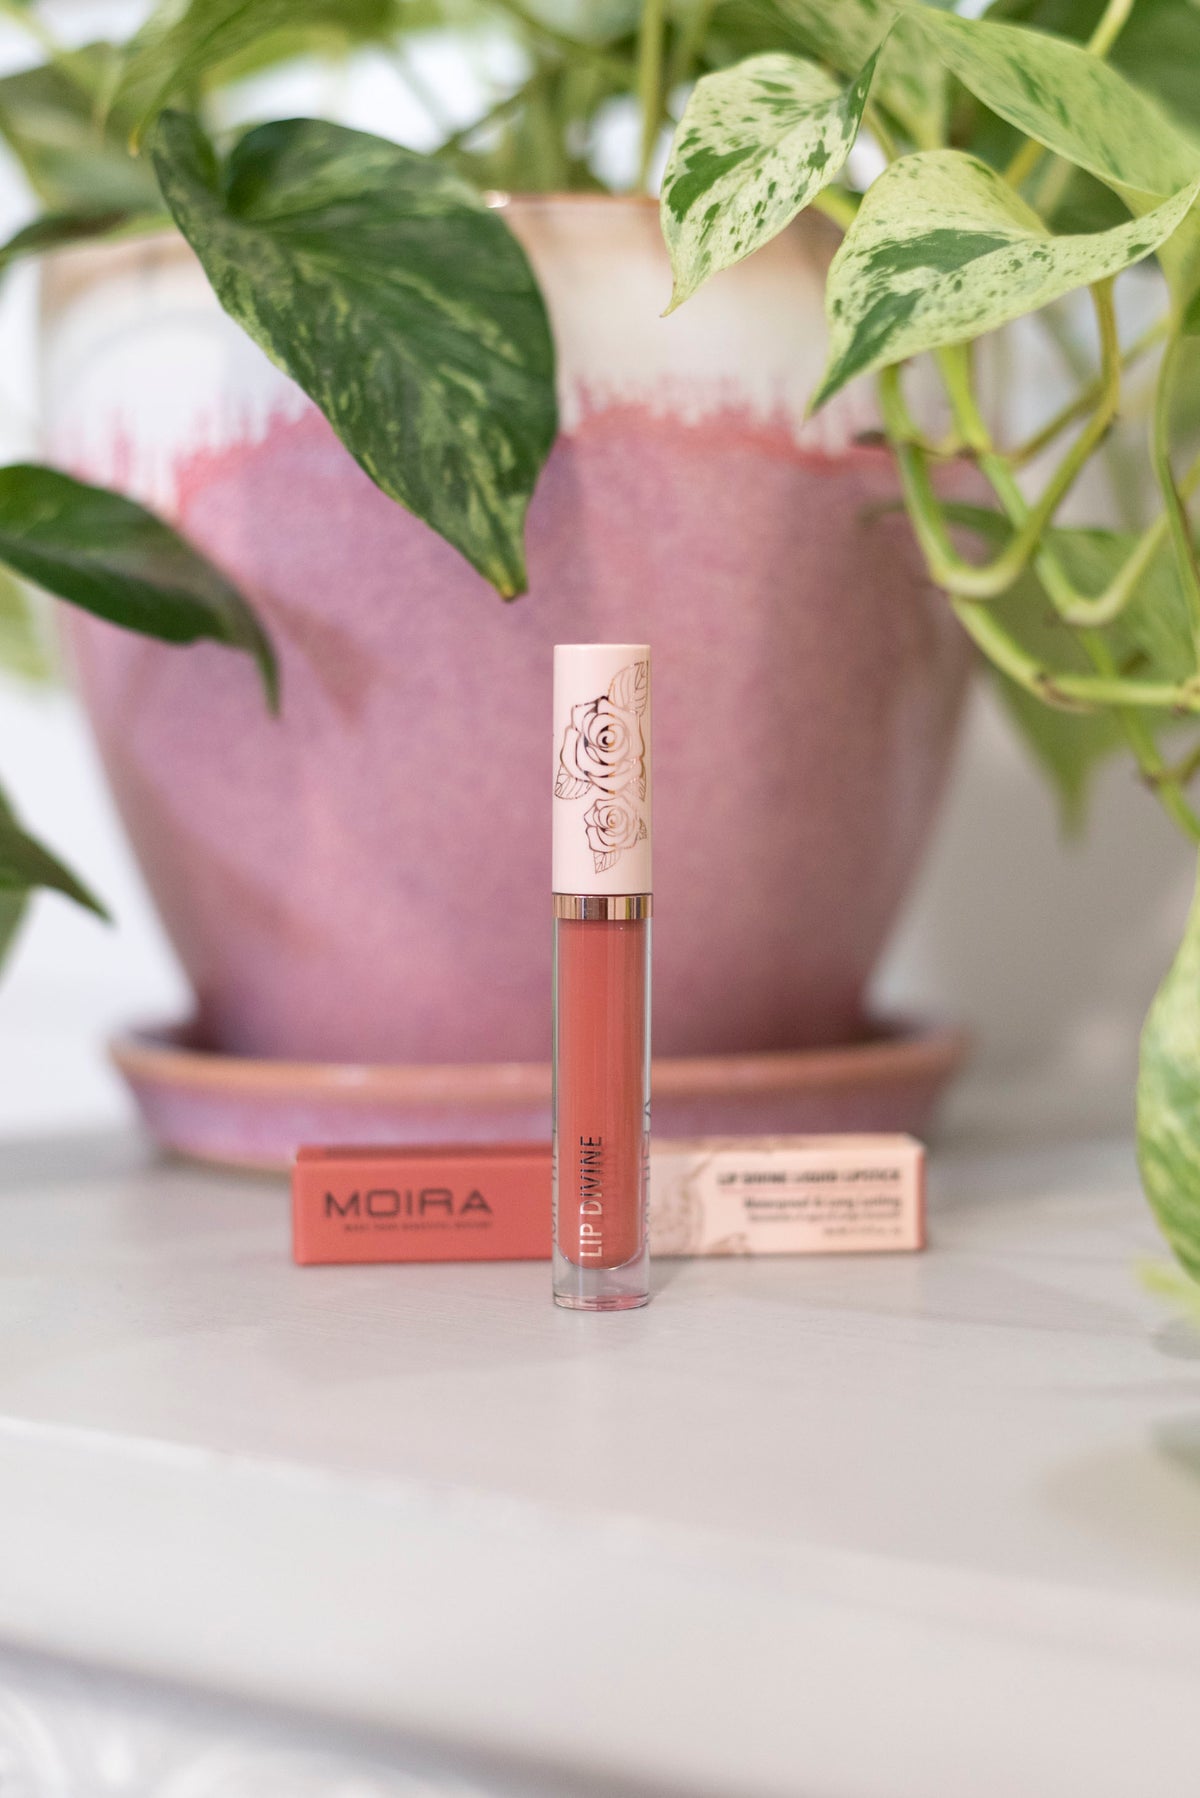 Moira Lip Divine Liquid Lipstick in Mariposa